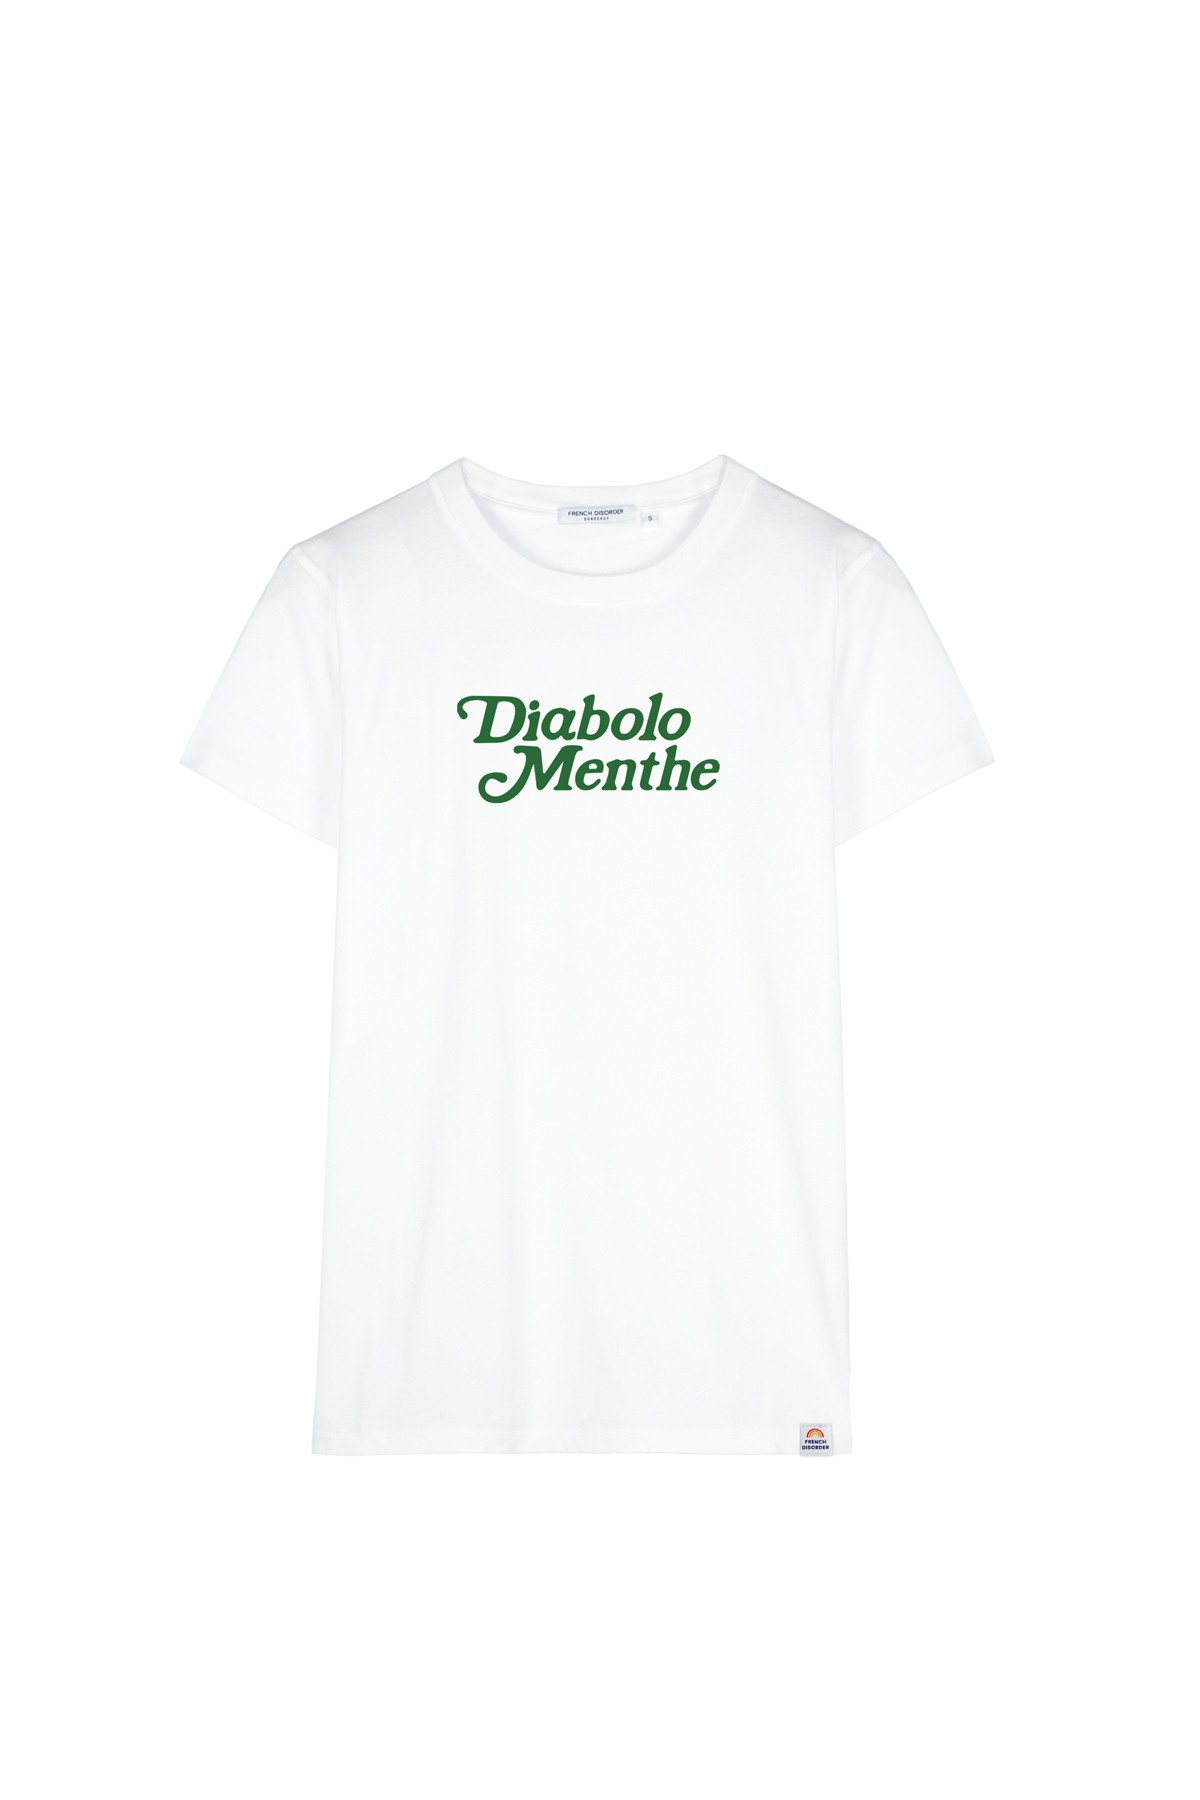 Photo de T-SHIRTS COL ROND Tshirt DIABOLO chez French Disorder